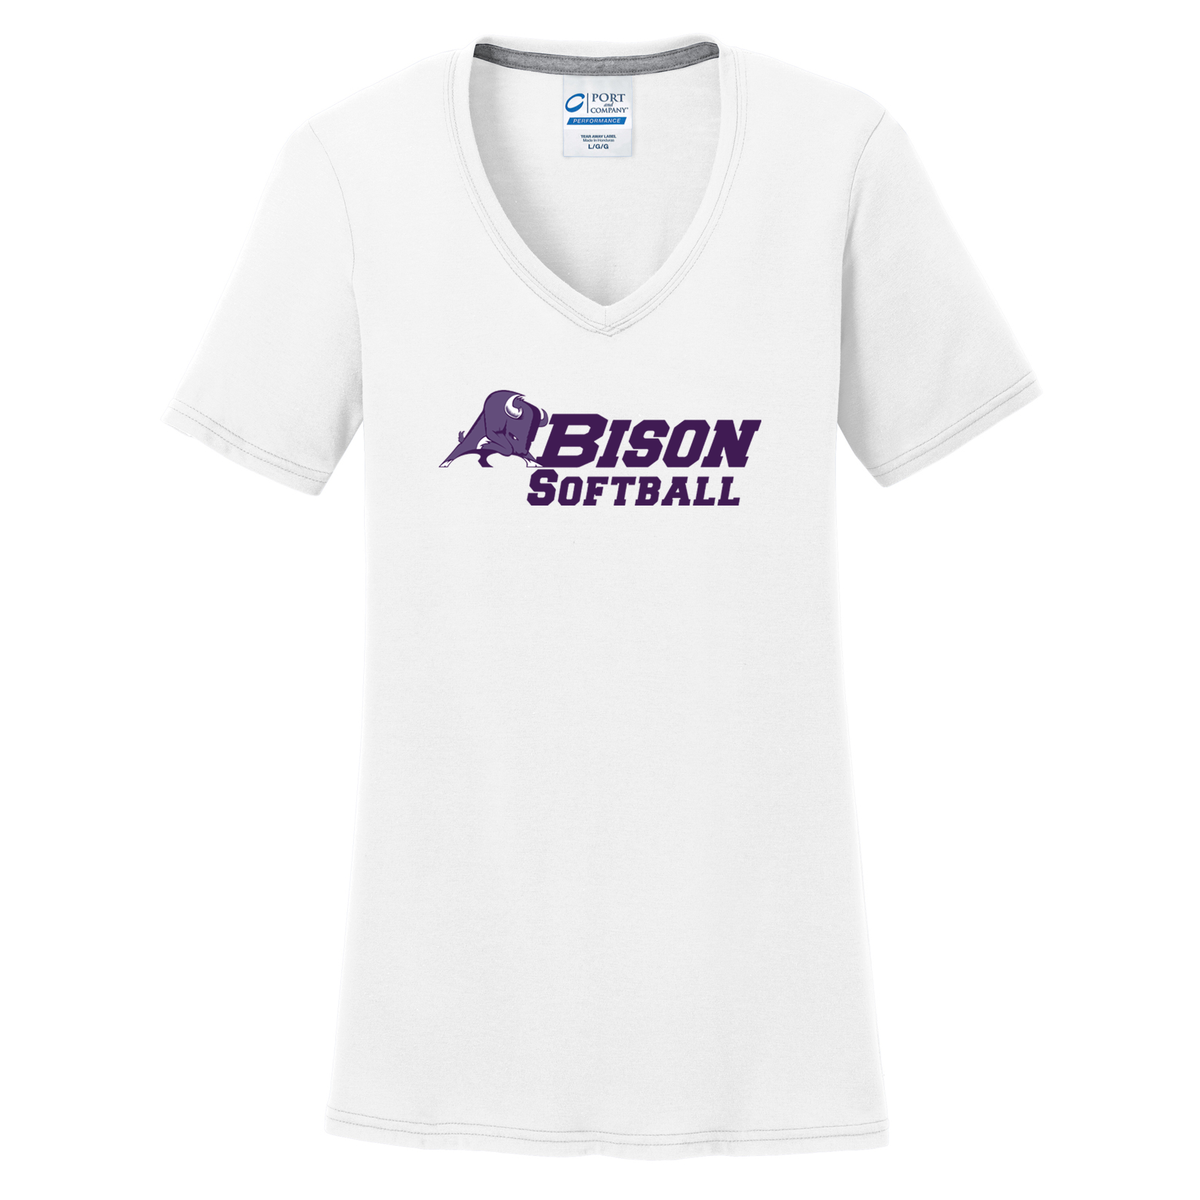 Sunset Bison Softball Women's T-Shirt